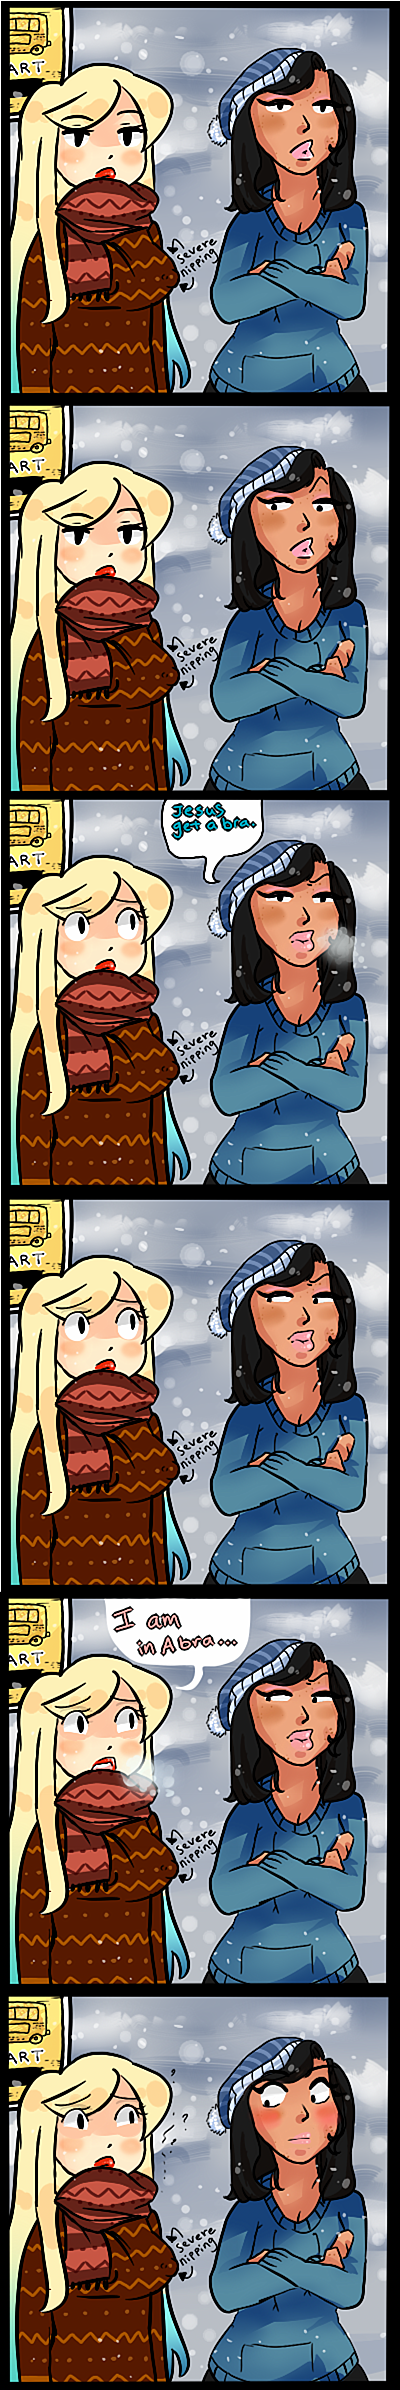 funny-comics-winter-boobs-bra